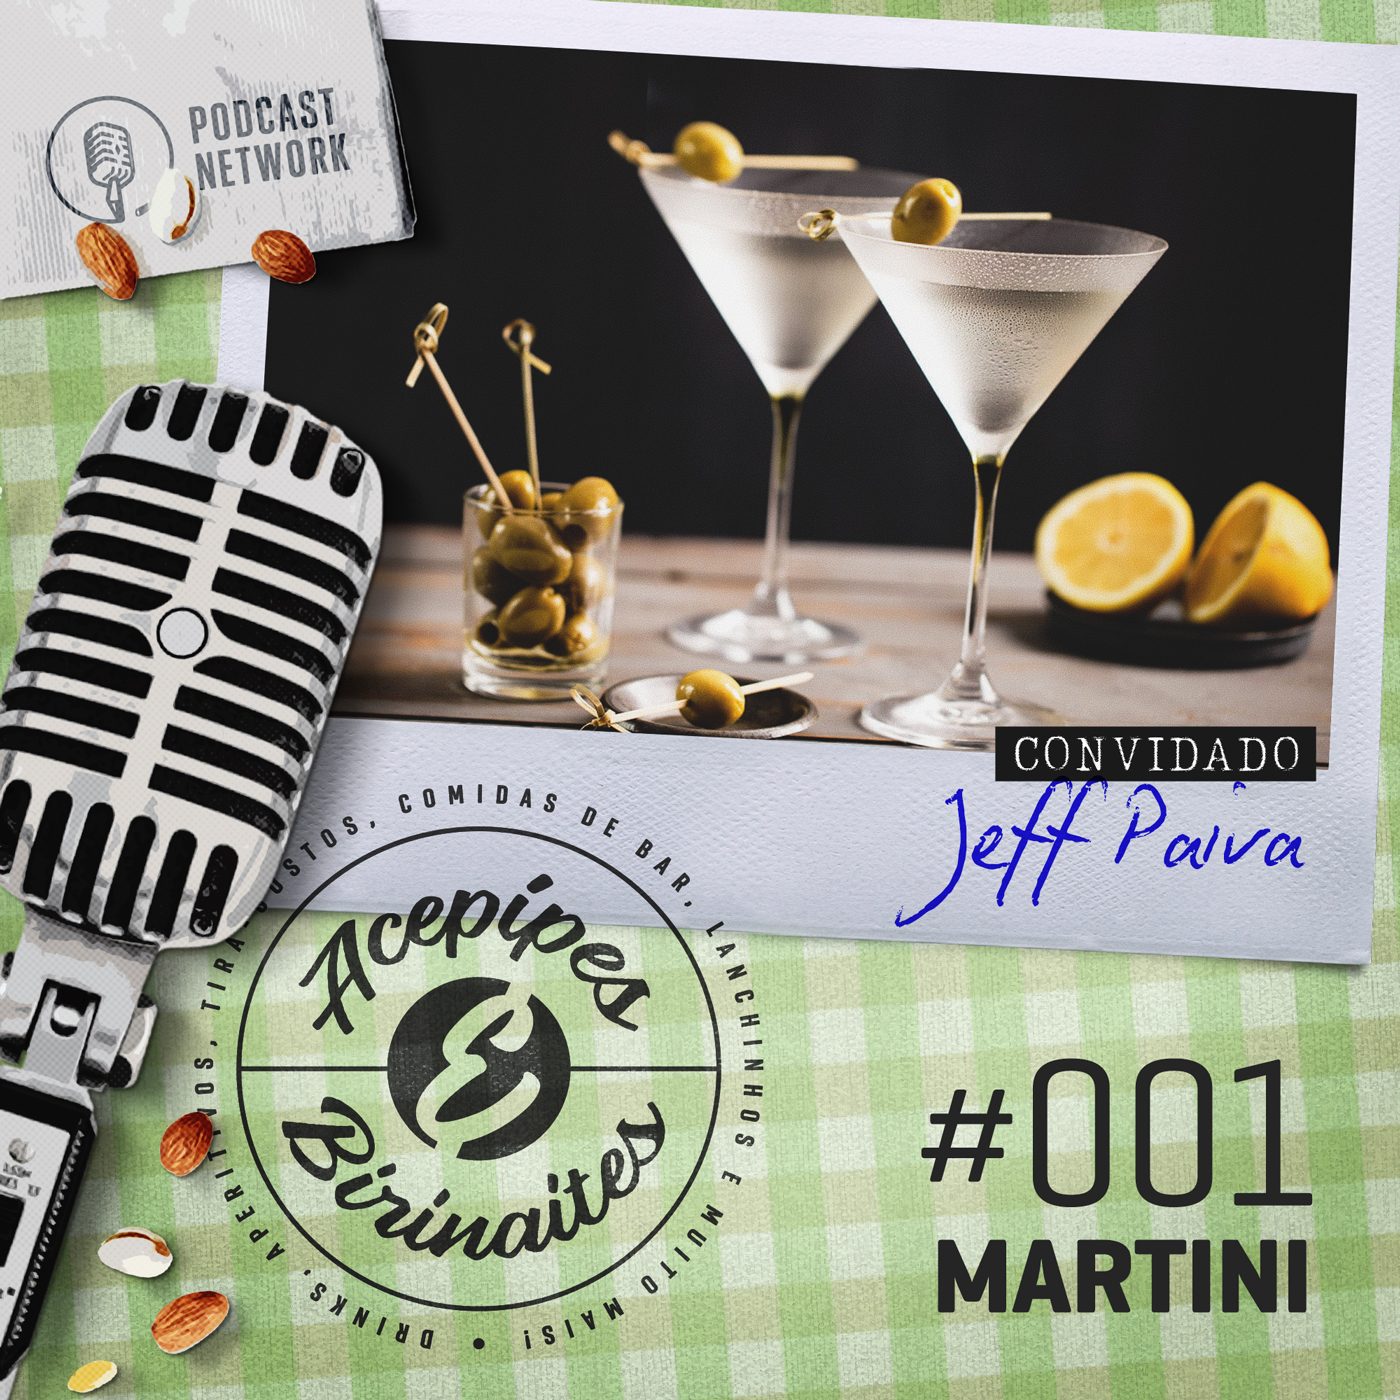 Acepipes e Birinaites #001 - Martini, com Jeff Paiva